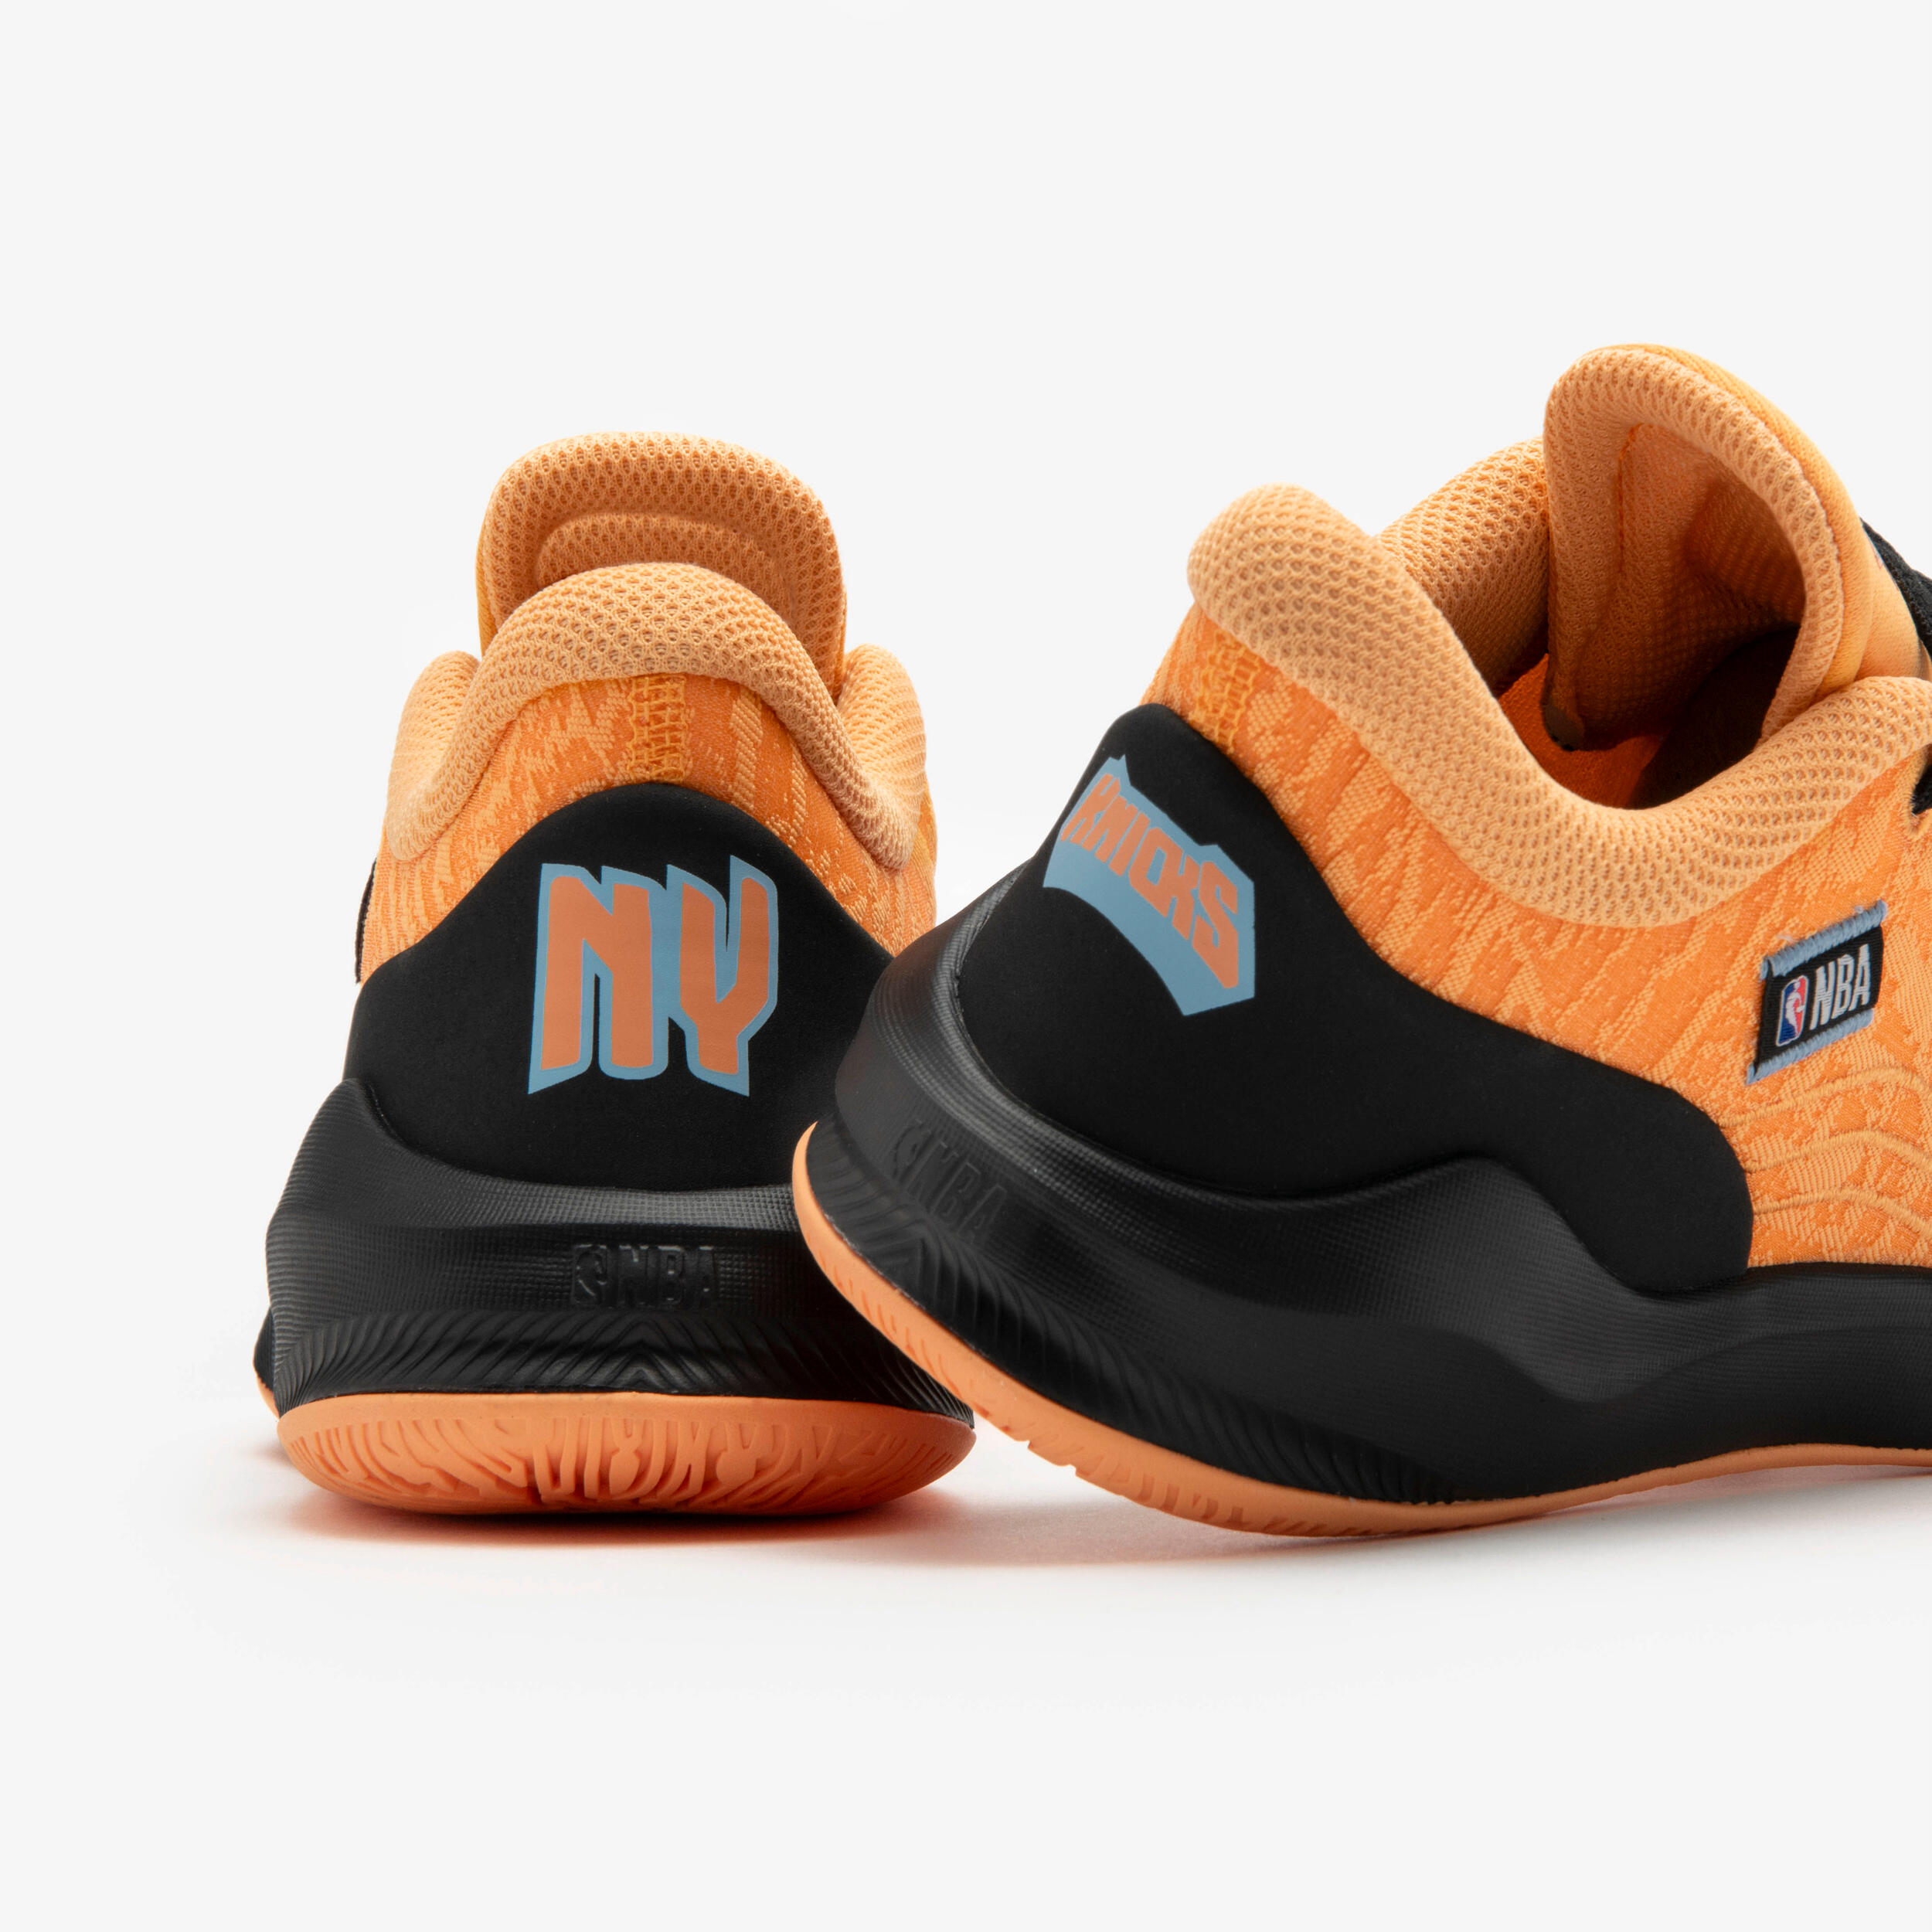 Kids' Basketball Shoes Fast 900 Low-1 - NBA Knicks/Orange 6/10